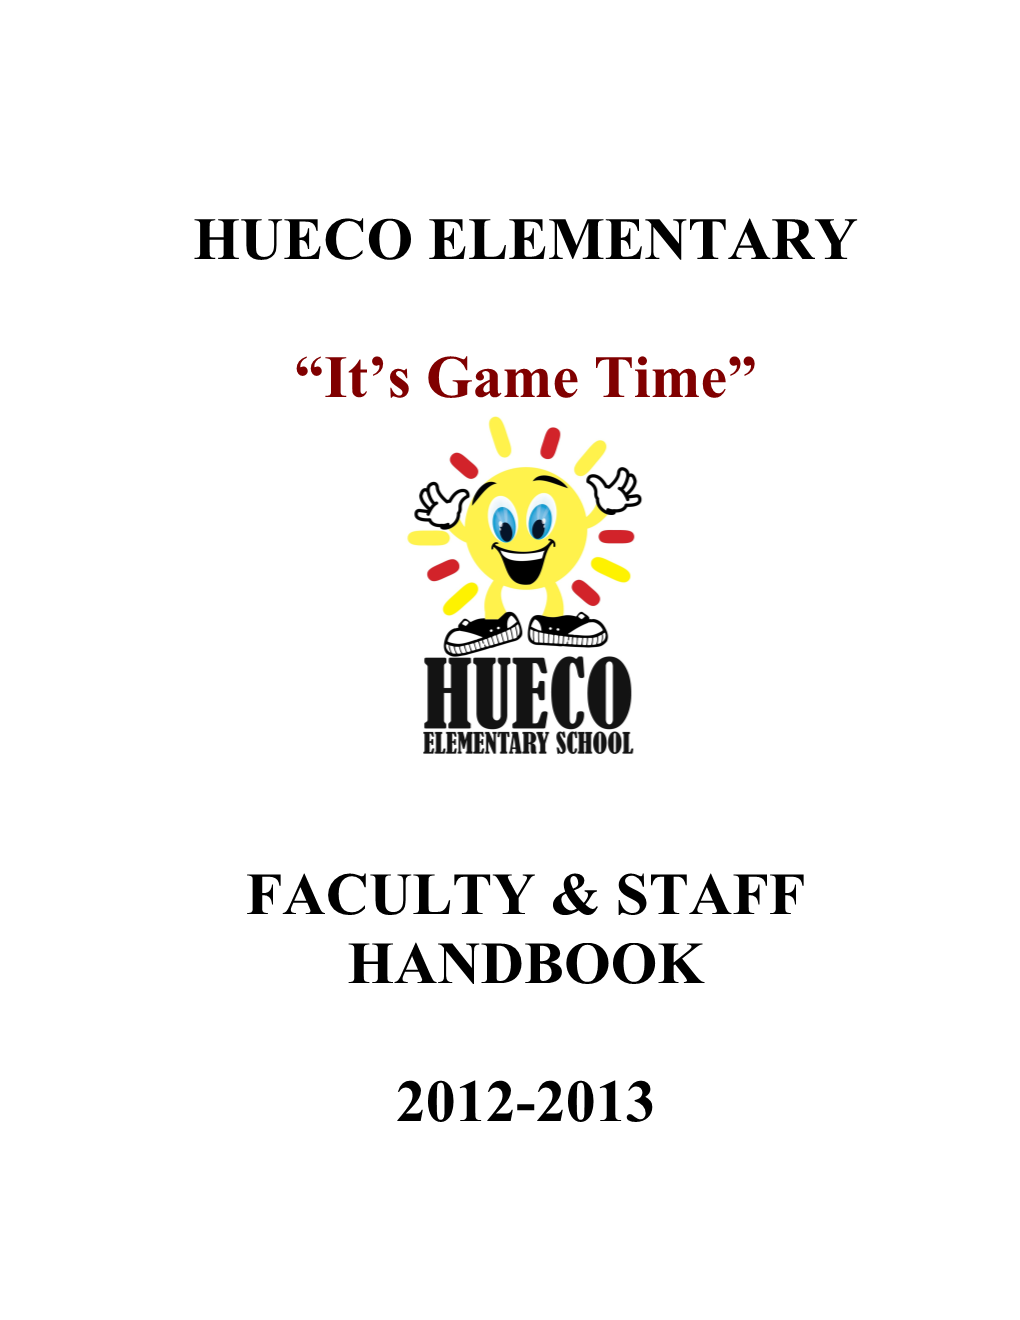 Hueco Elementary School